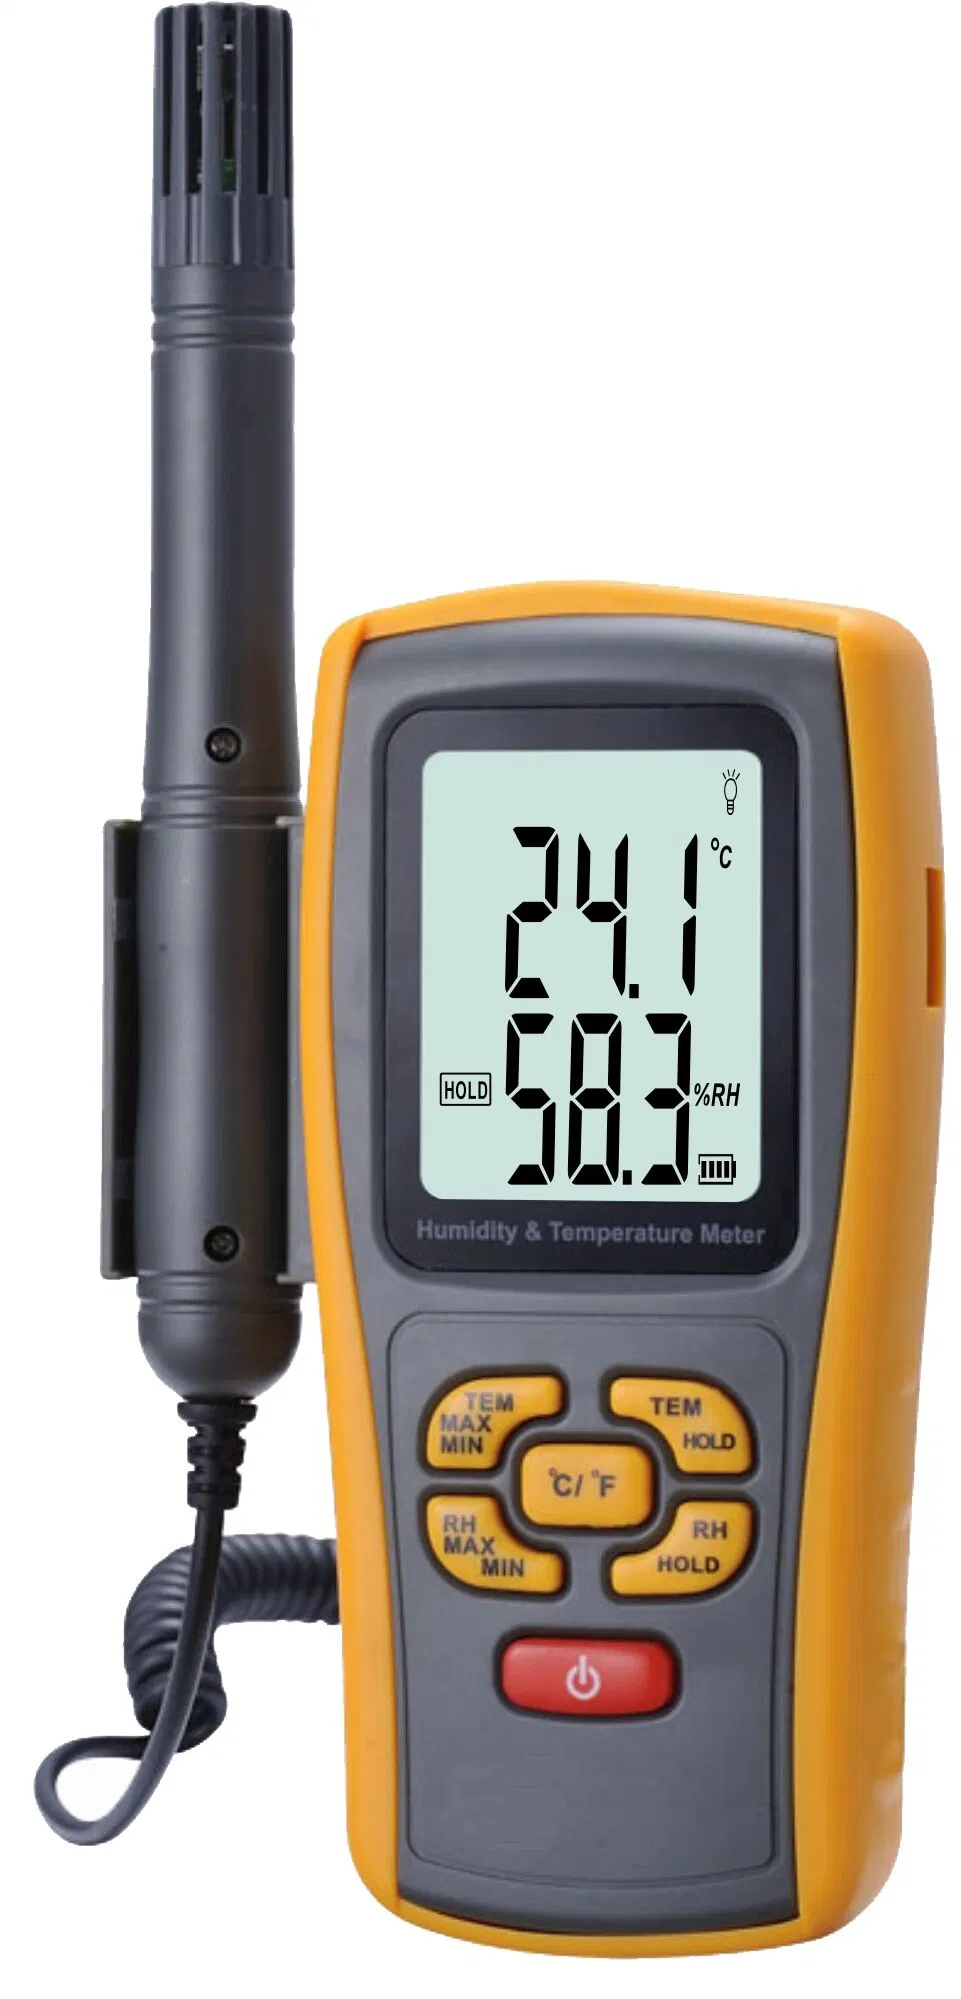 Humidity & Temperature Meter (AMF051)